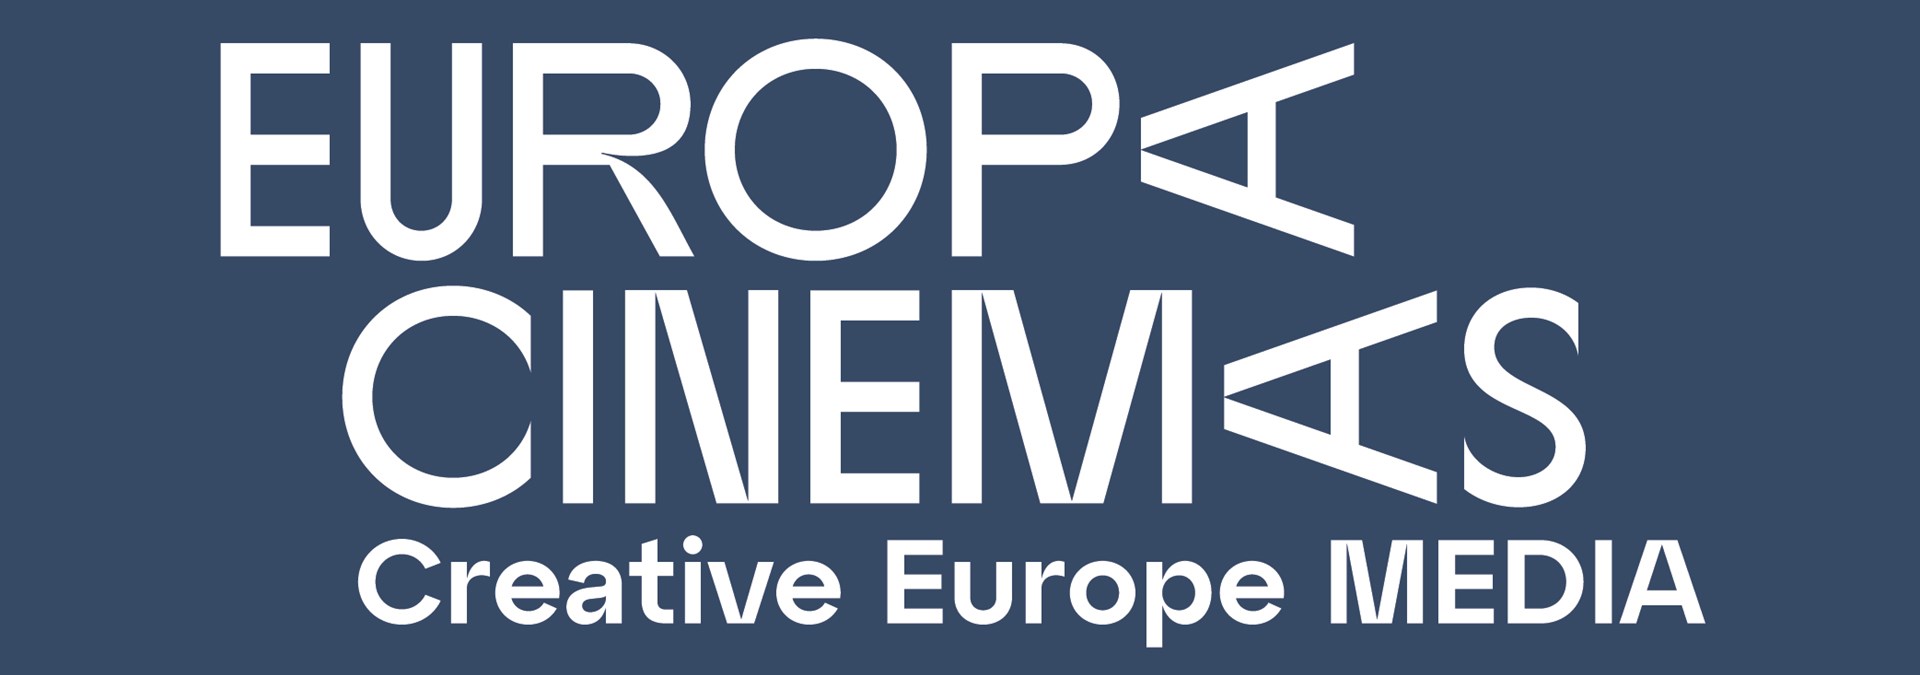 EUROPACINEMAS+CREATIVE Logo White Blue Background